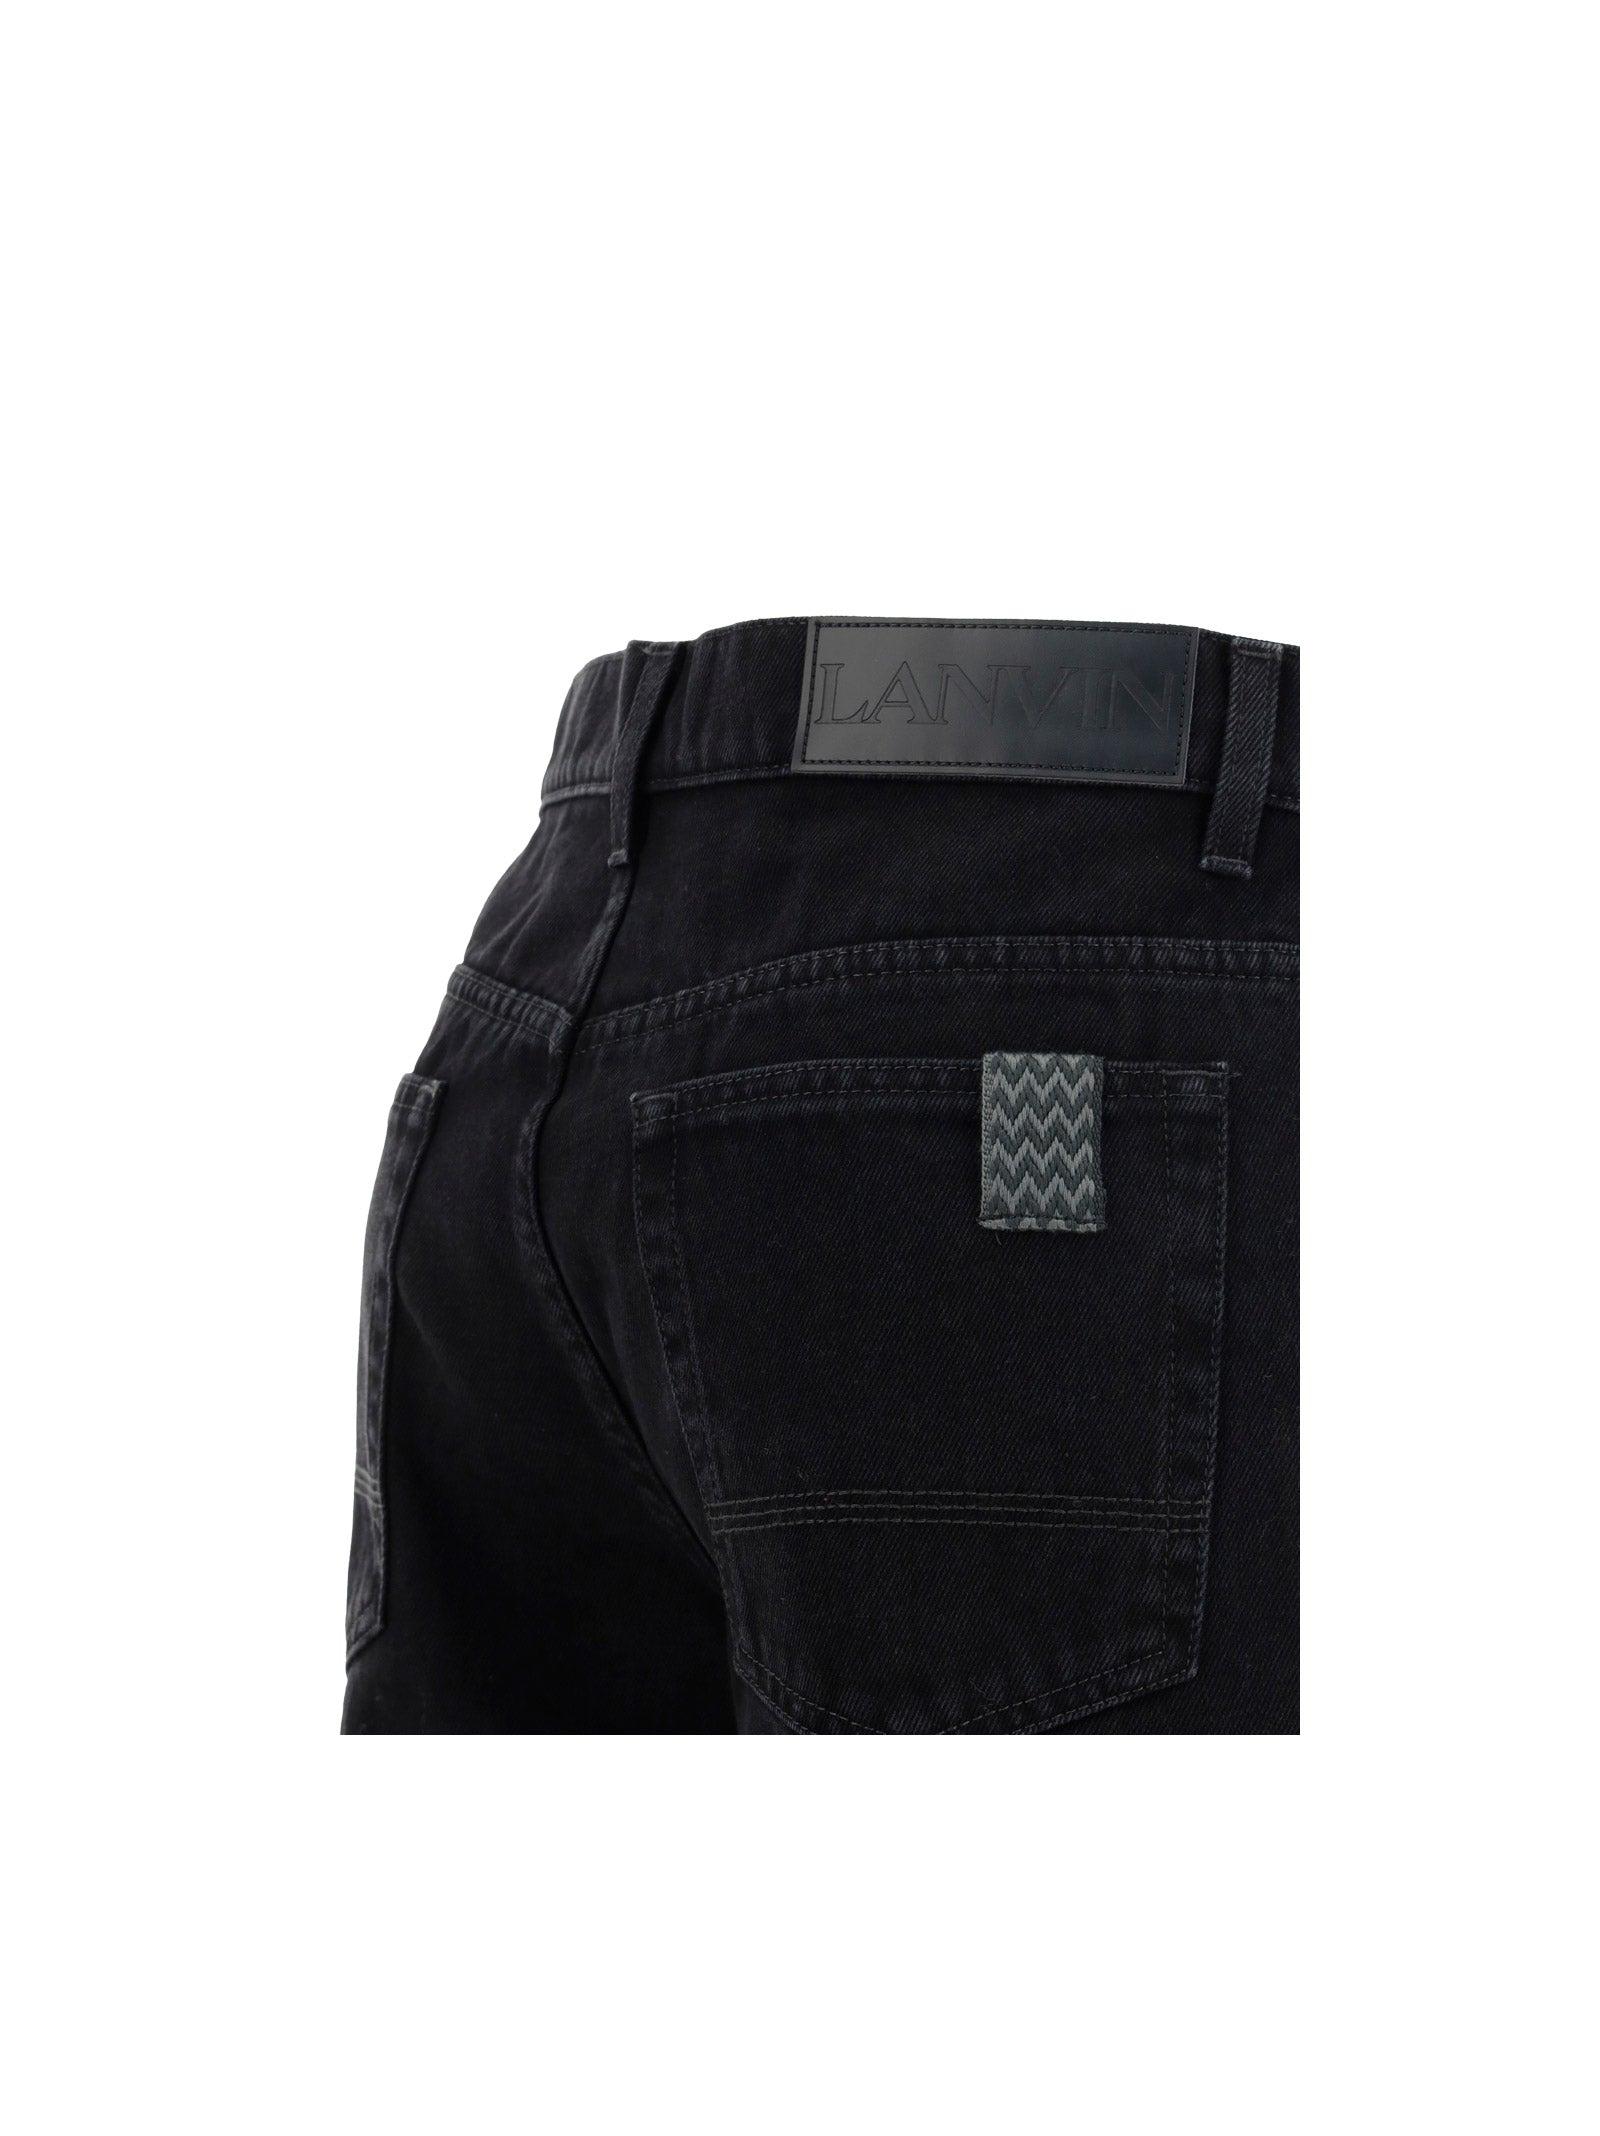 Lanvin Curb Jeans in Black for Men | Lyst